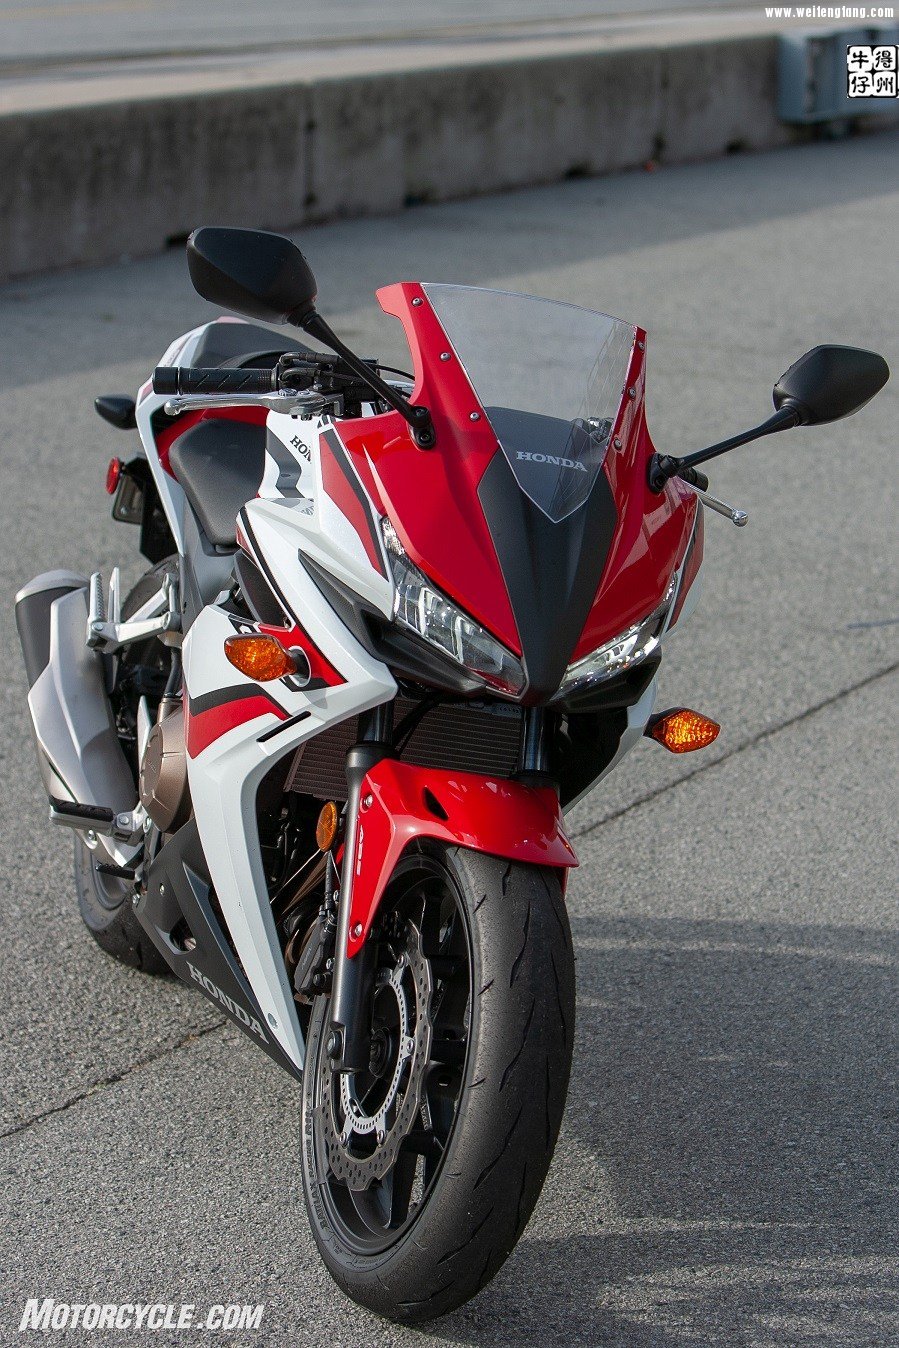 062218-Lightweight-Sportbikes-Honda-CBR500R-06.jpg